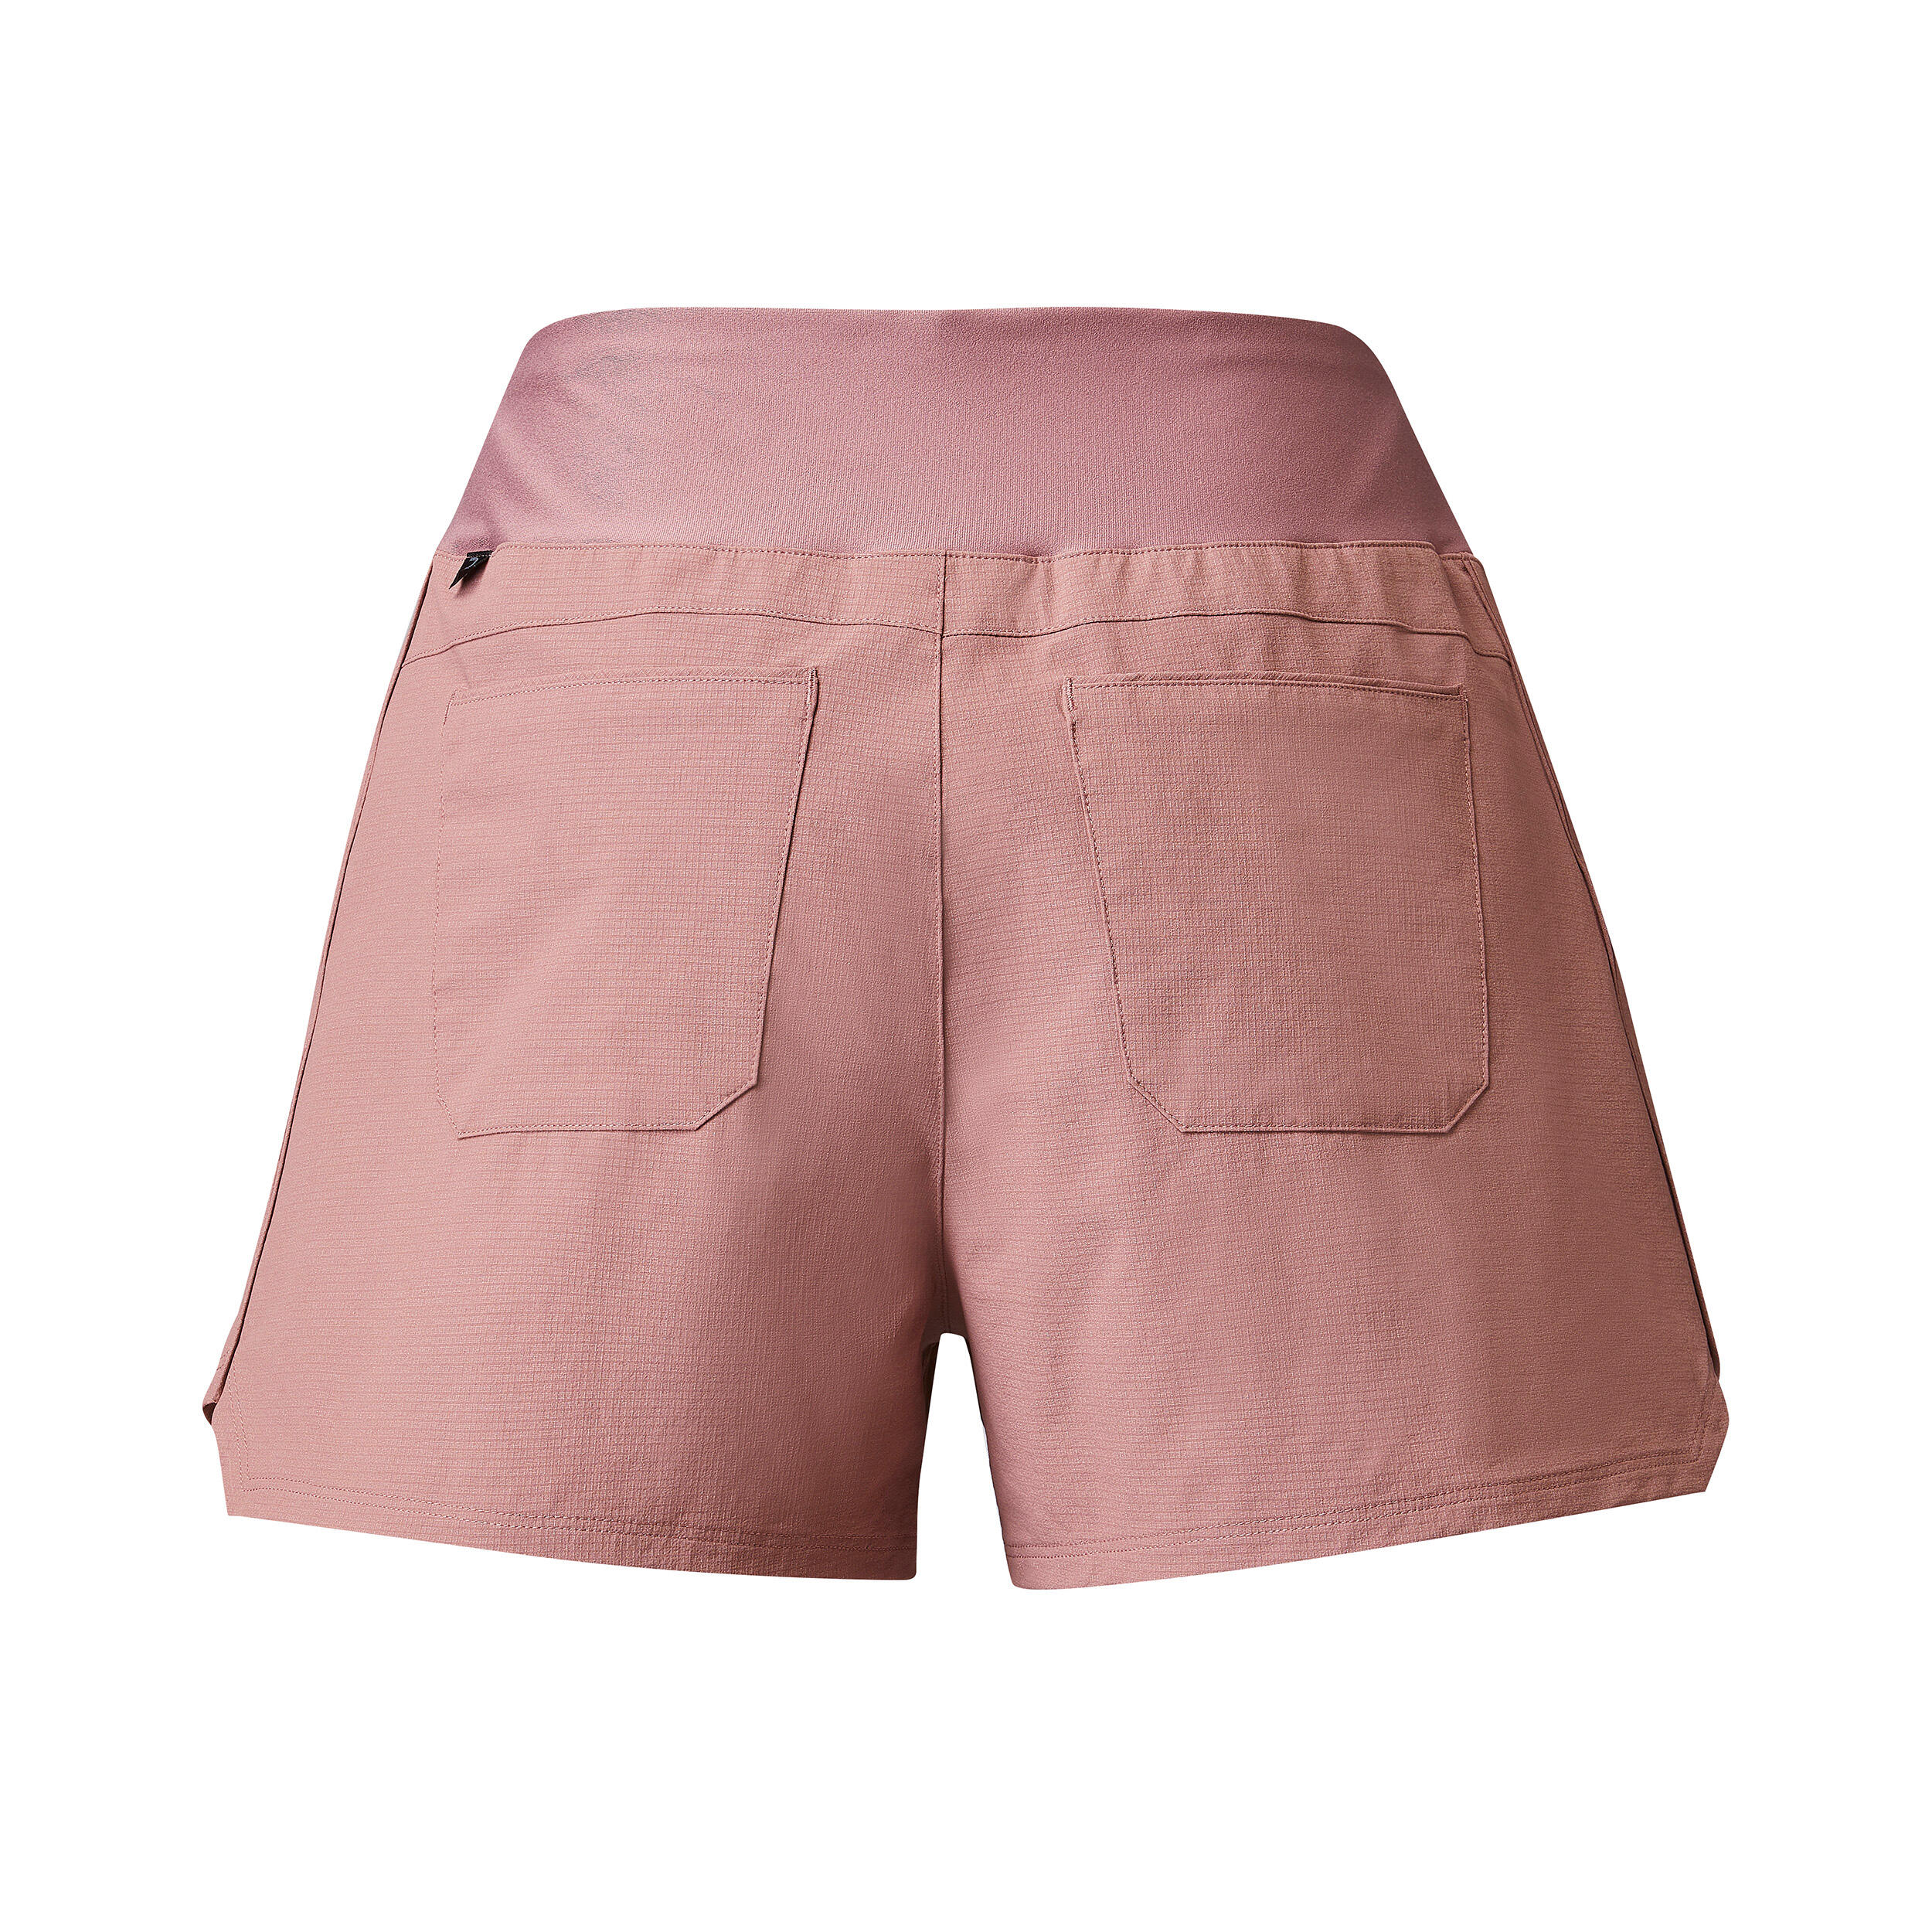 Women's Trekking Short Shorts-TRAVEL 900-Pink 7/7